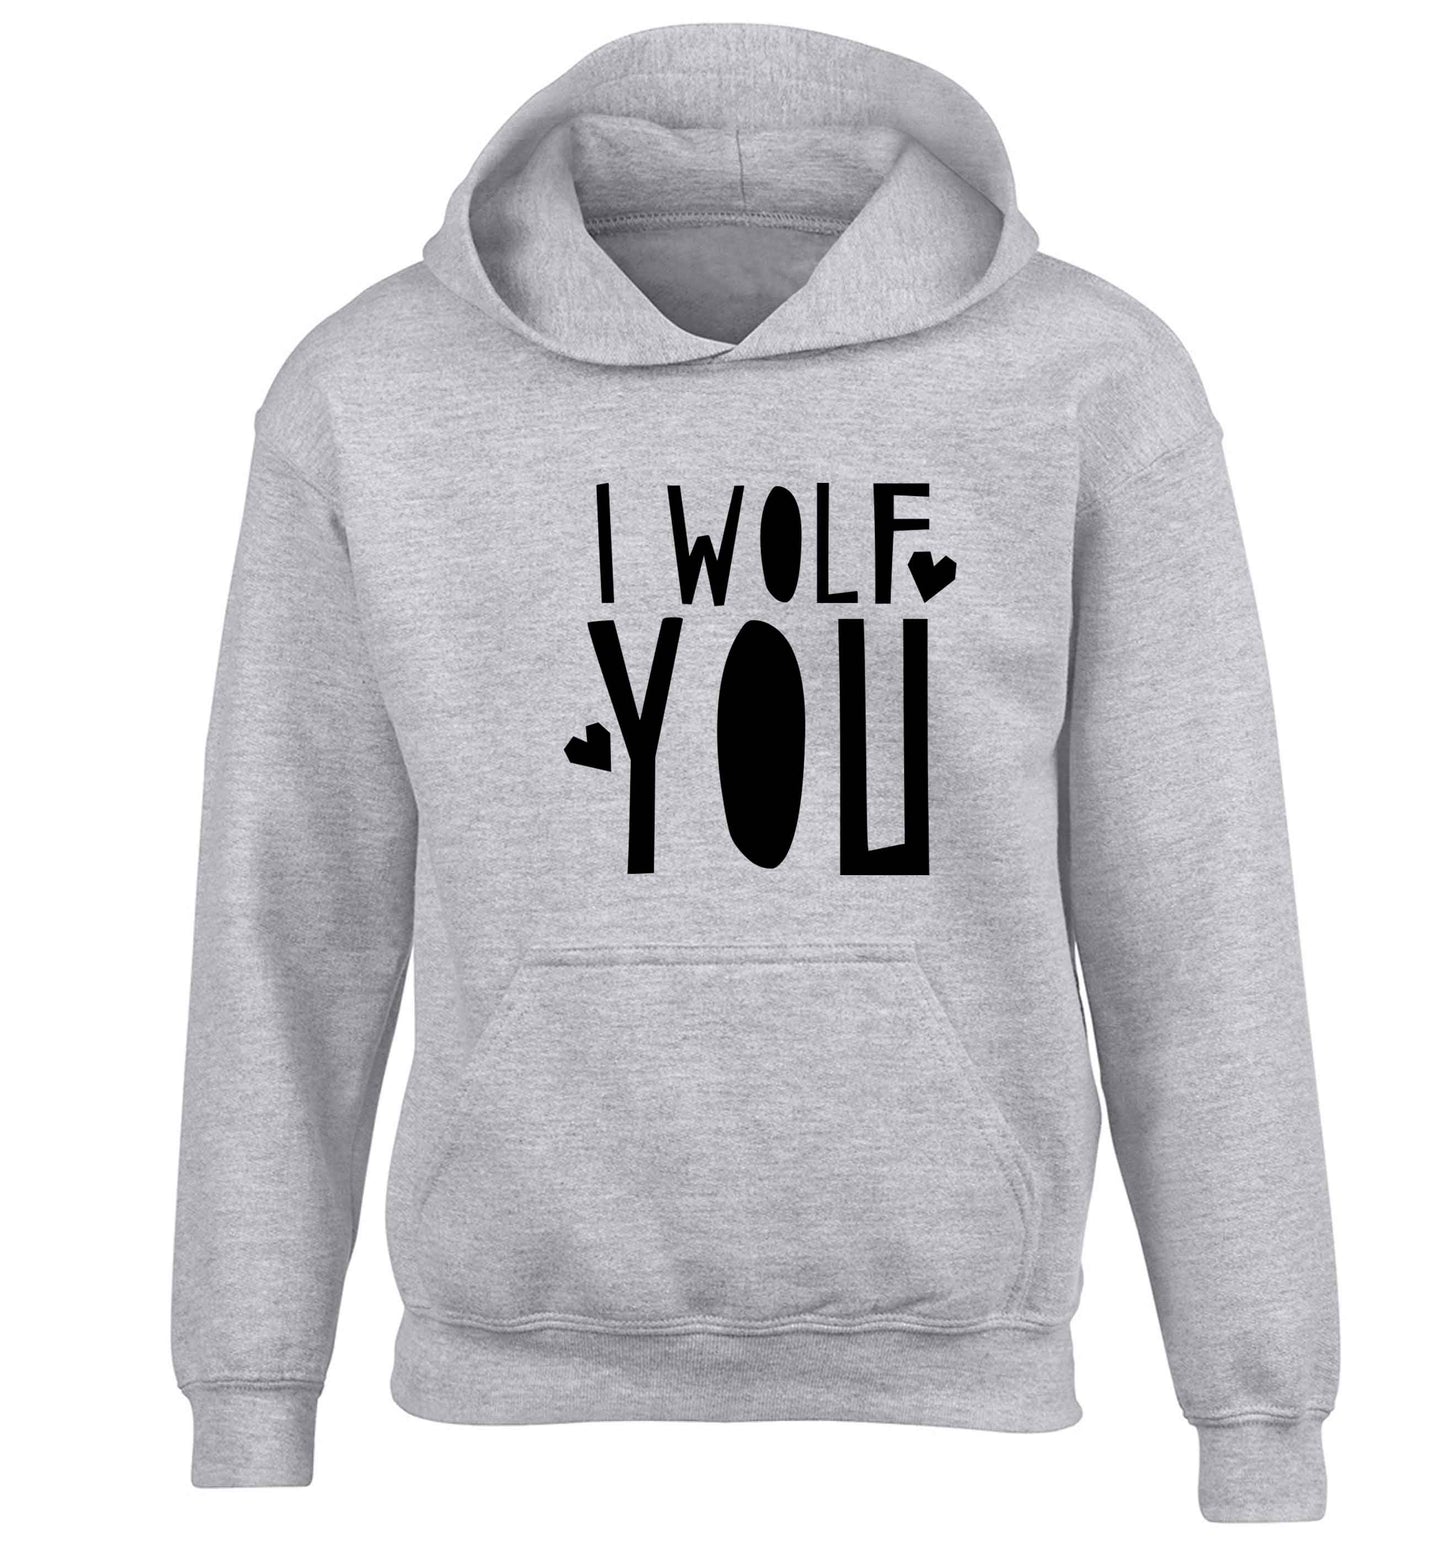 I wolf you children's grey hoodie 12-13 Years